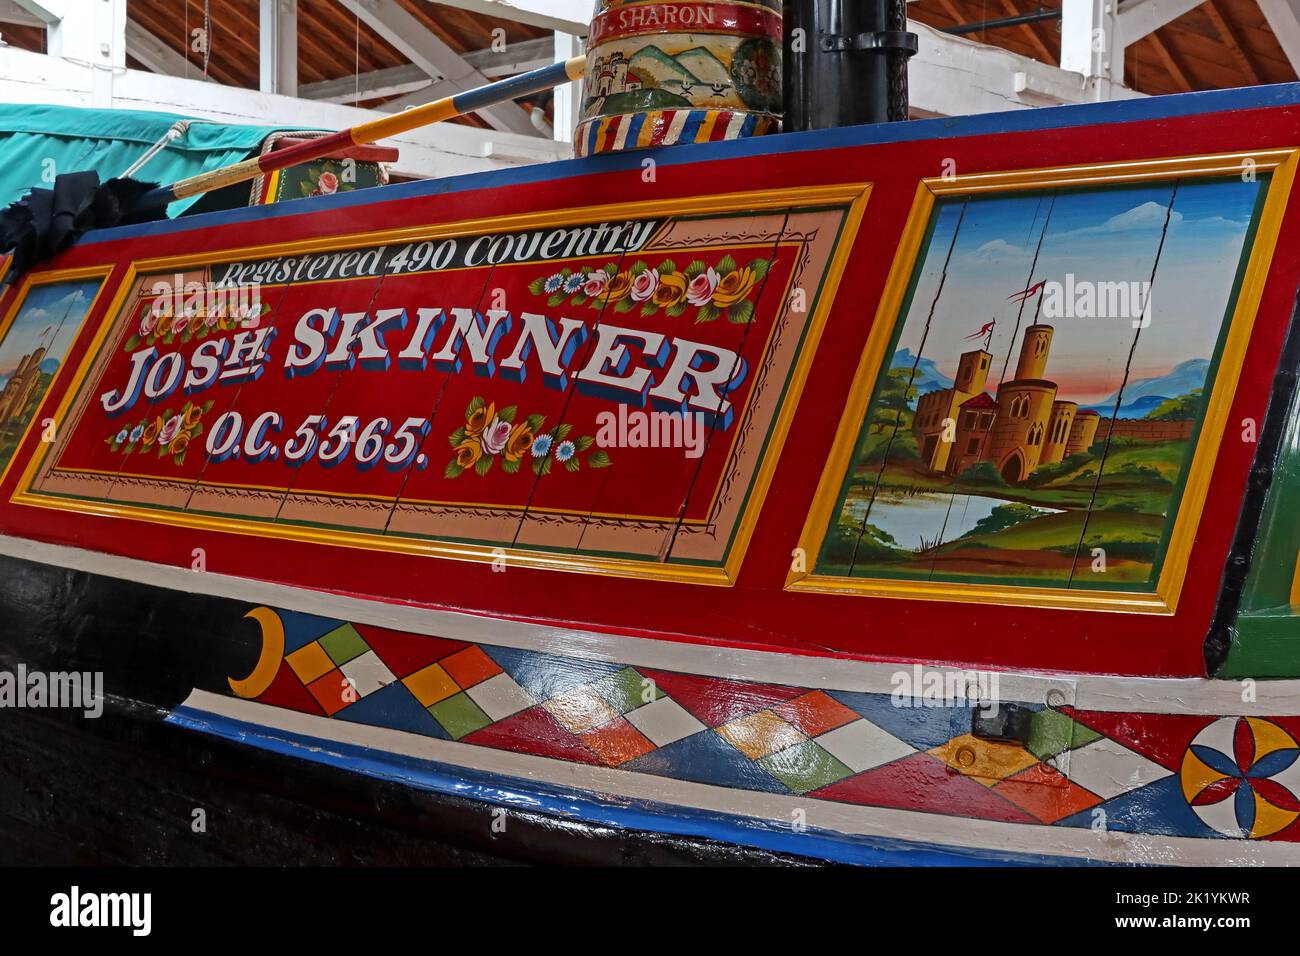 Barge Decoration, Josh Skinner, OC 5565, registriert 490 Coventry, traditionell dekorierter Barge, Burgbild Stockfoto